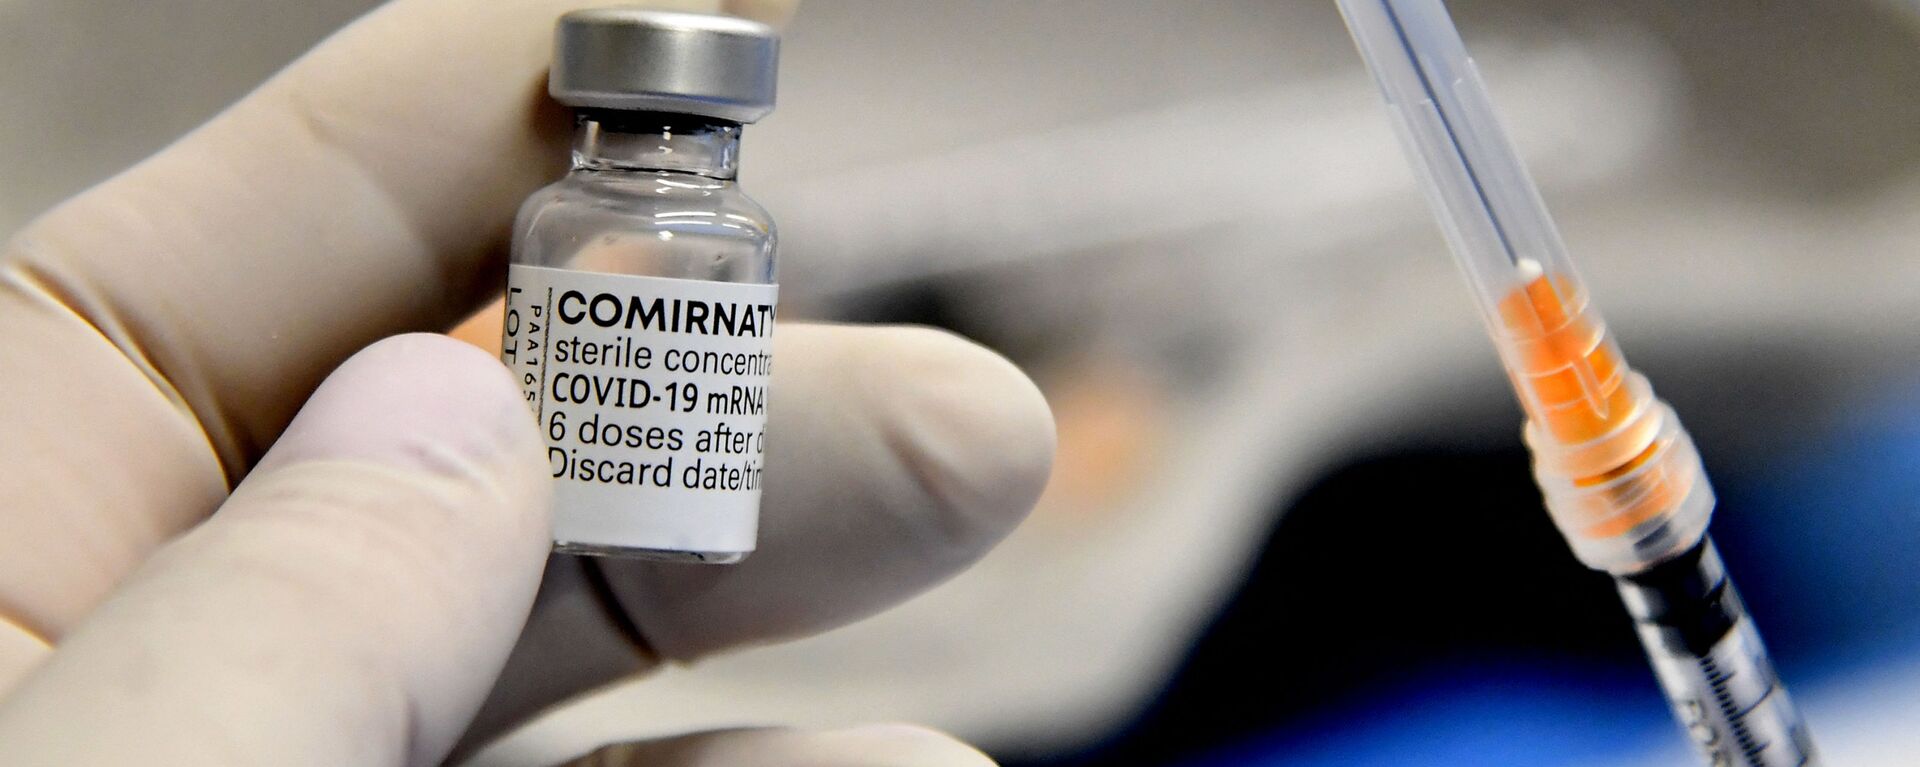 Медицинский работник держит шприц и флакон вакцины Comirnaty от Pfizer-BioNTech против Covid-19, Италия - Sputnik Латвия, 1920, 02.12.2021